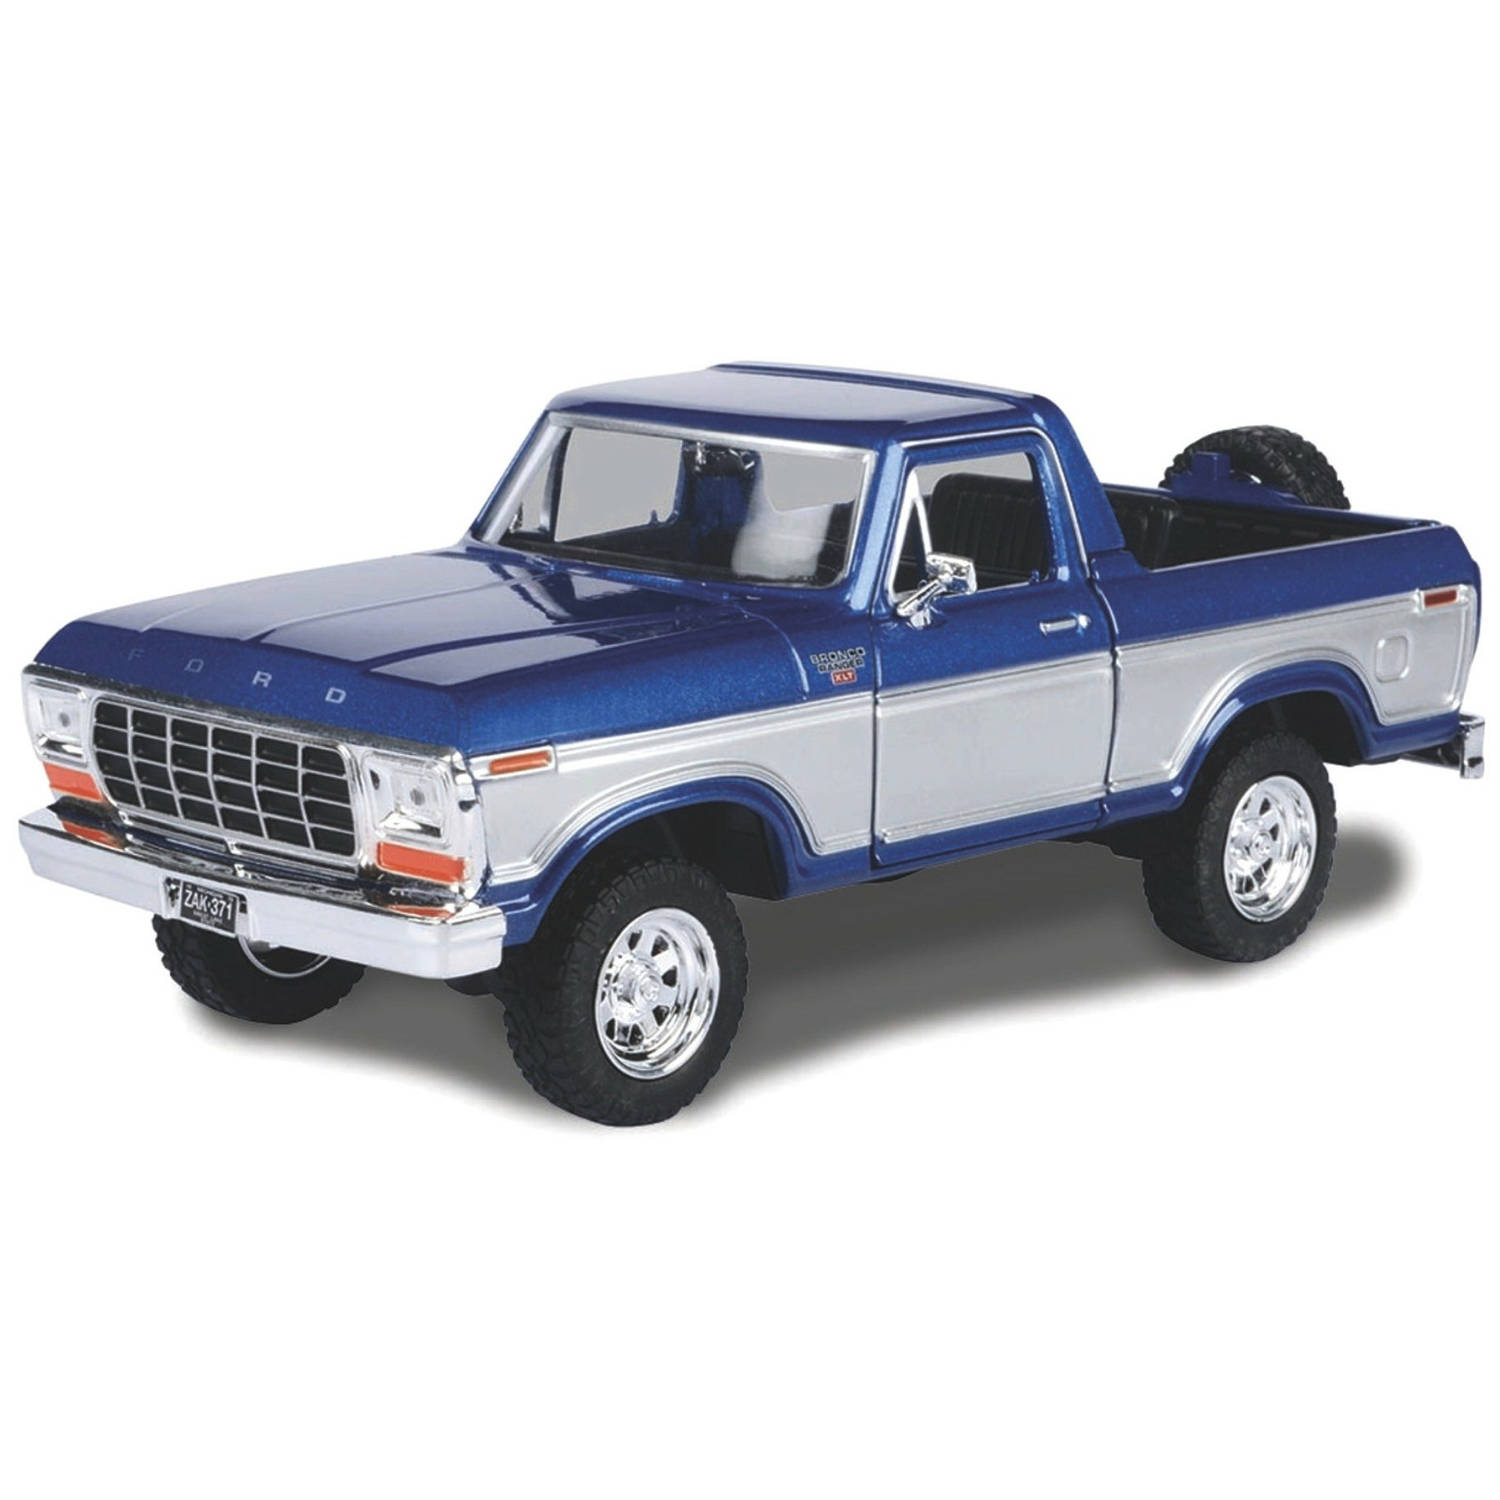 Motor Max modelauto/speelgoedauto Ford Bronco pick-up - blauw - schaal 1:24/19 x 8 x 8 cm